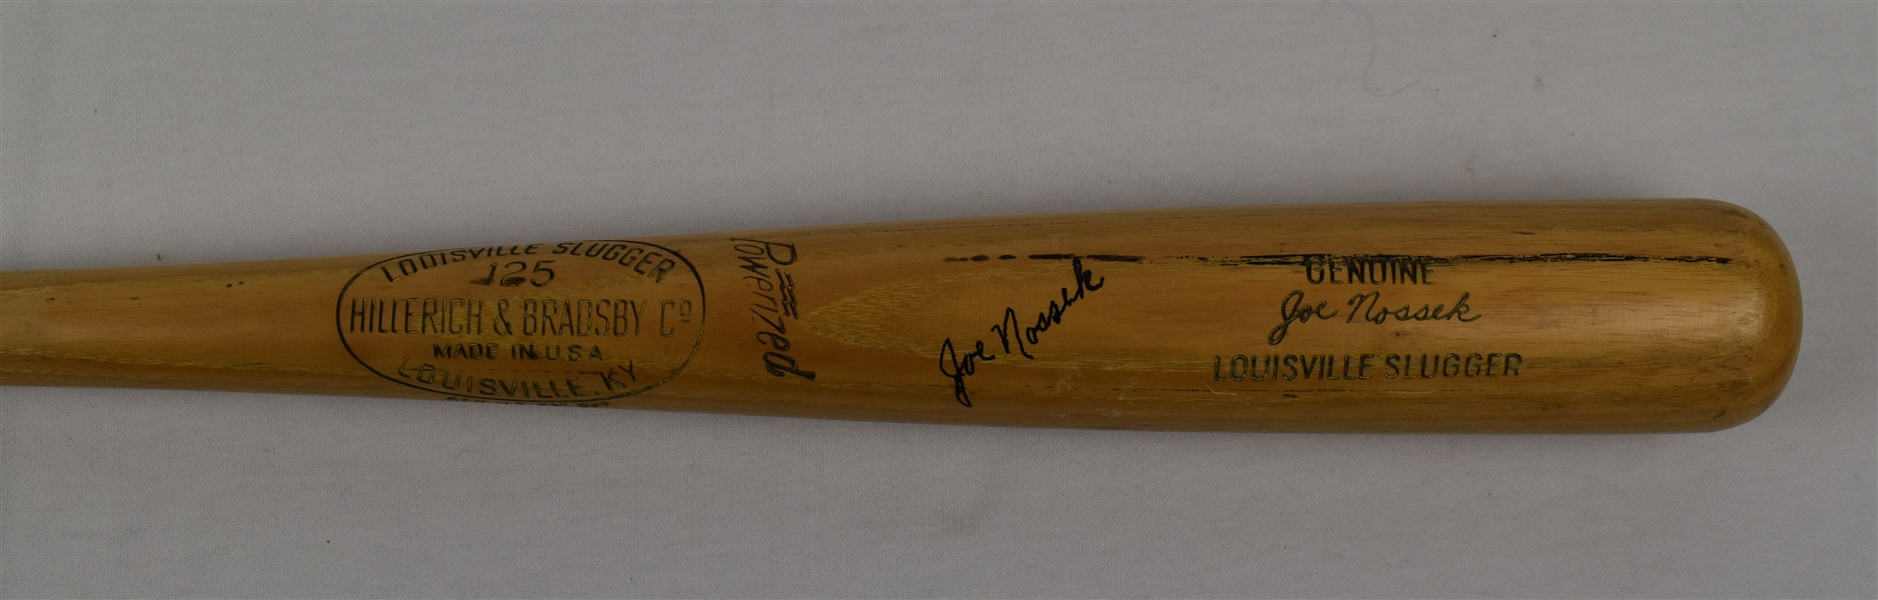 Joe Nossek 1964 Minnesota Twins Game Used & Autographed Bat 